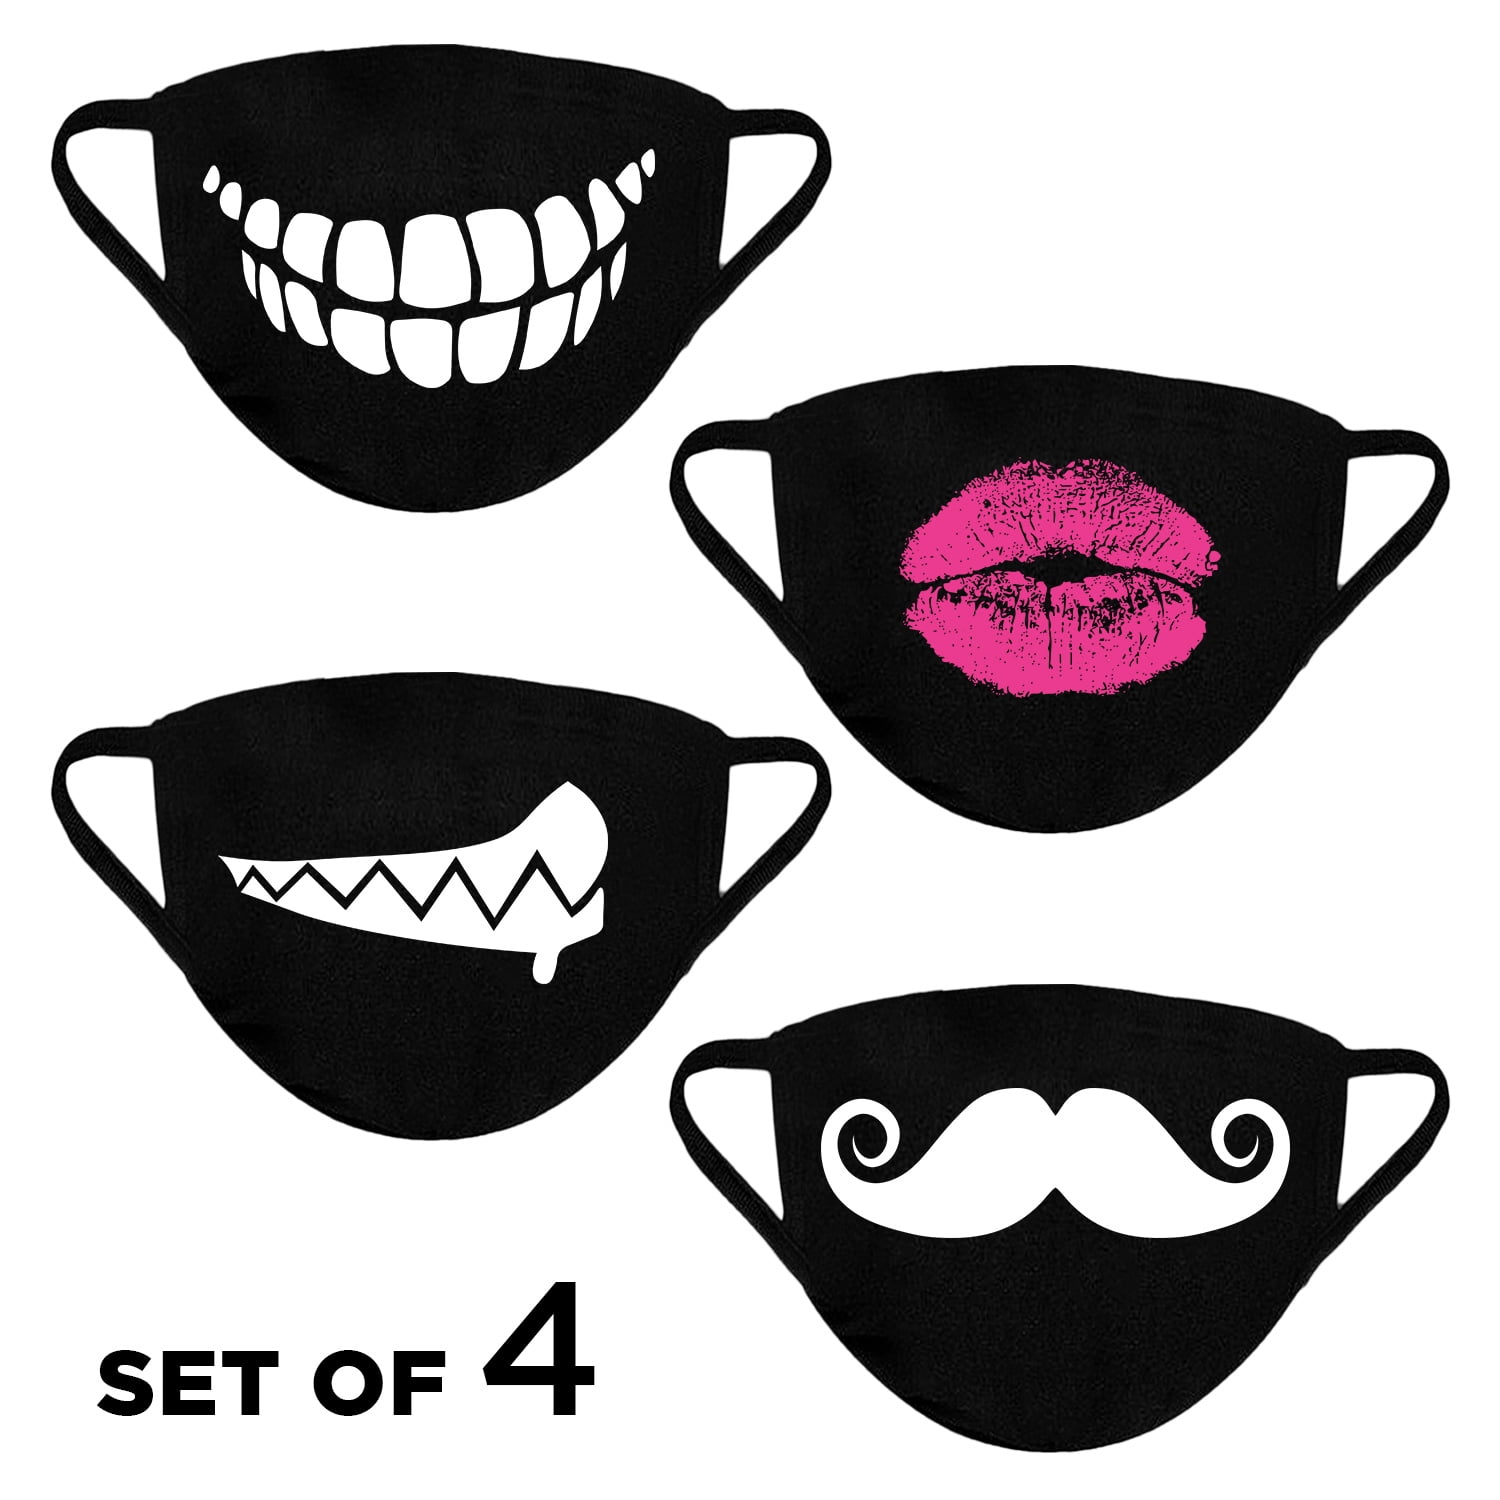 Mouth Face Mask Reusable Mask Washable Breathable Stretch Black Adult Mask